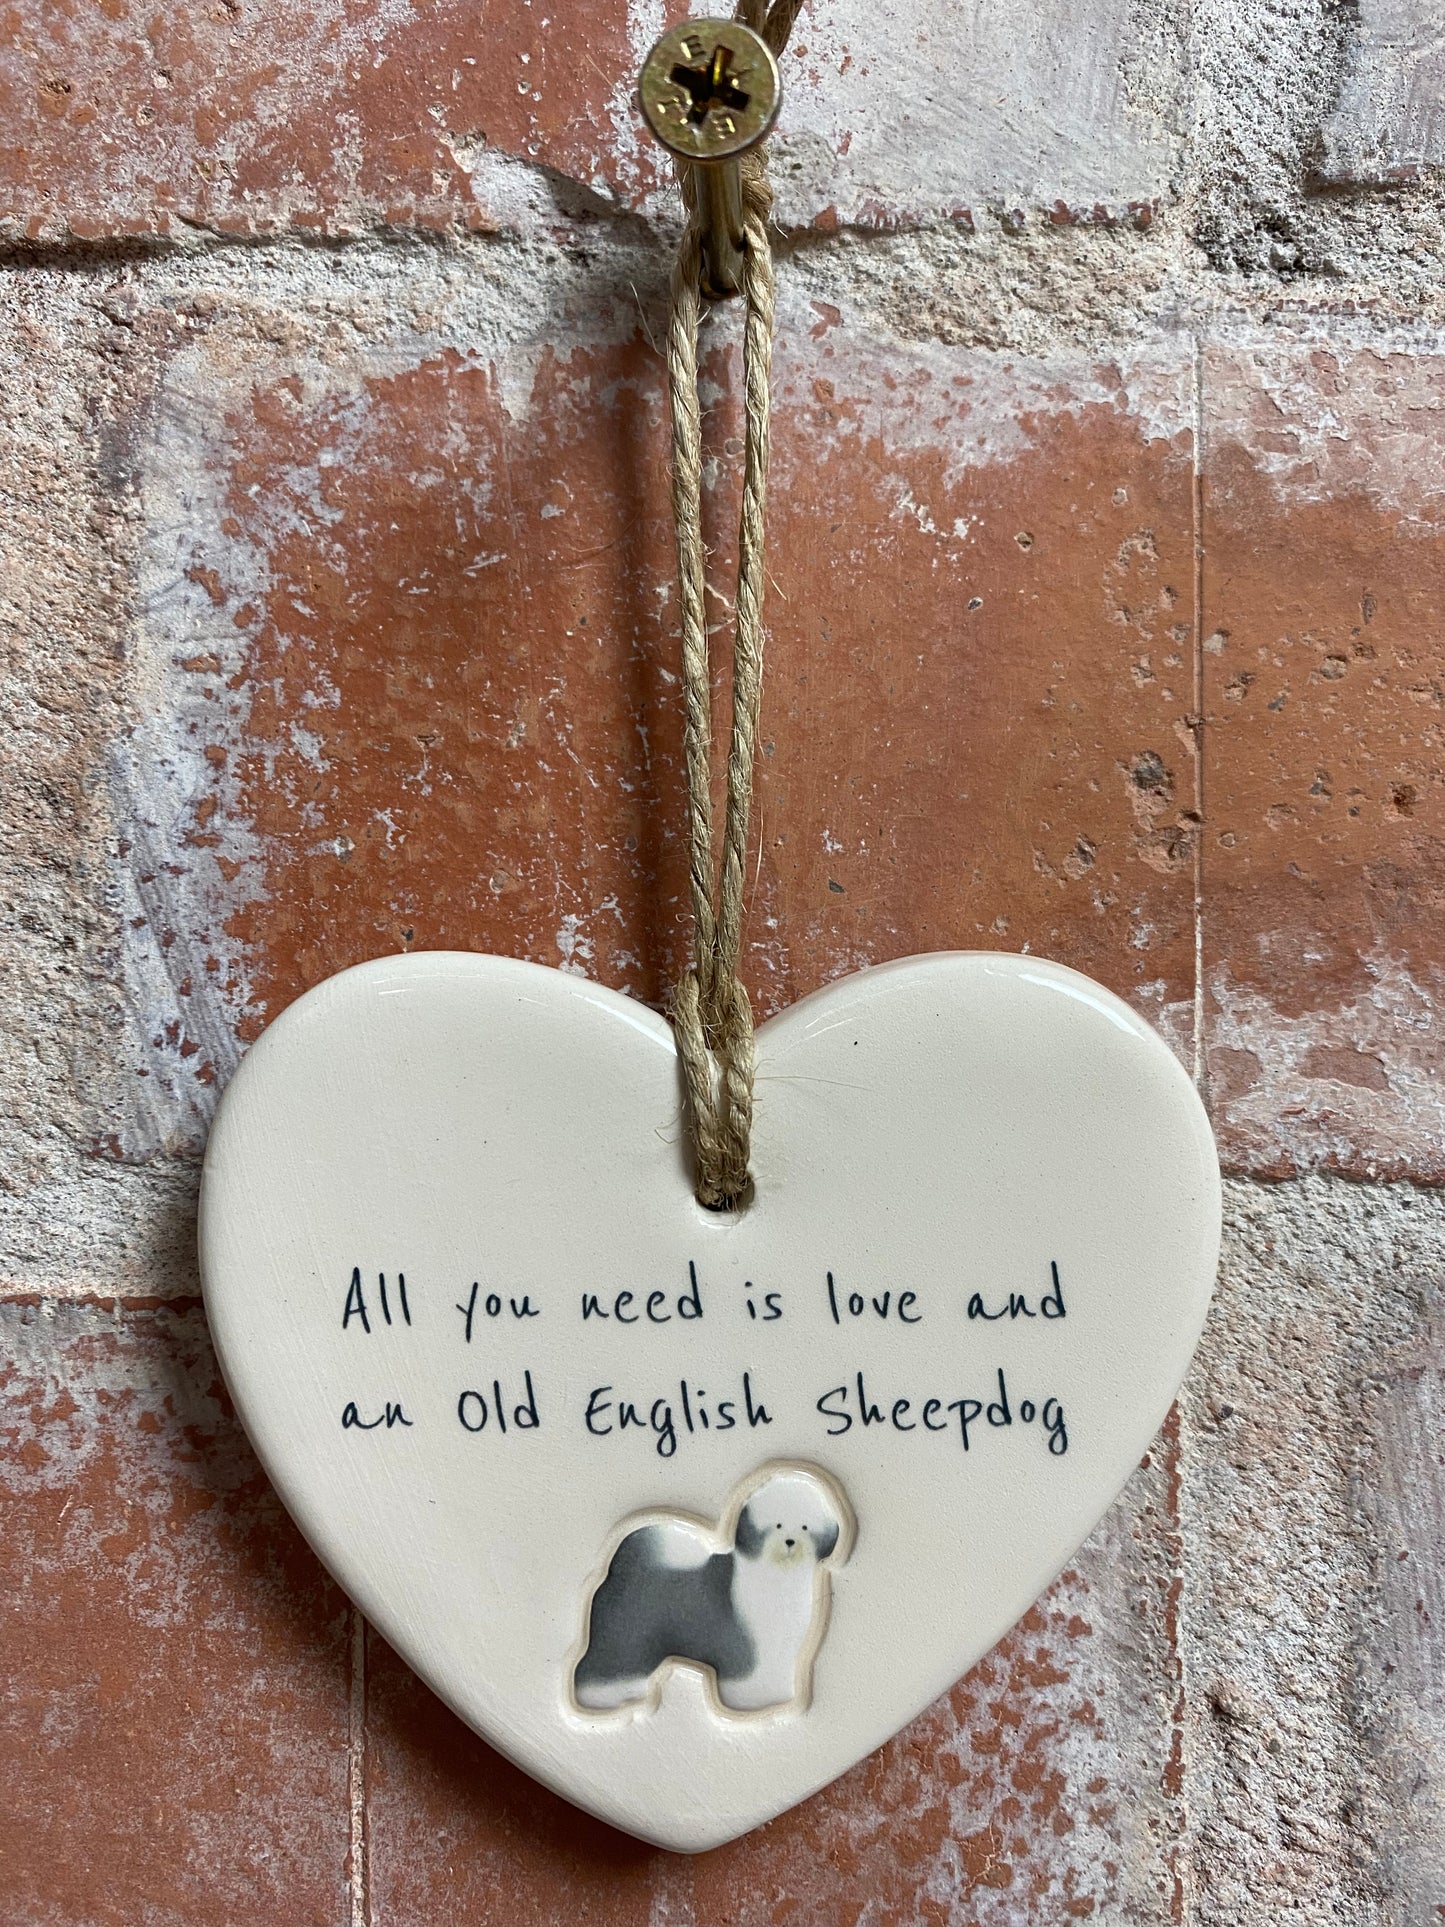 Old English Sheepdog ceramic heart